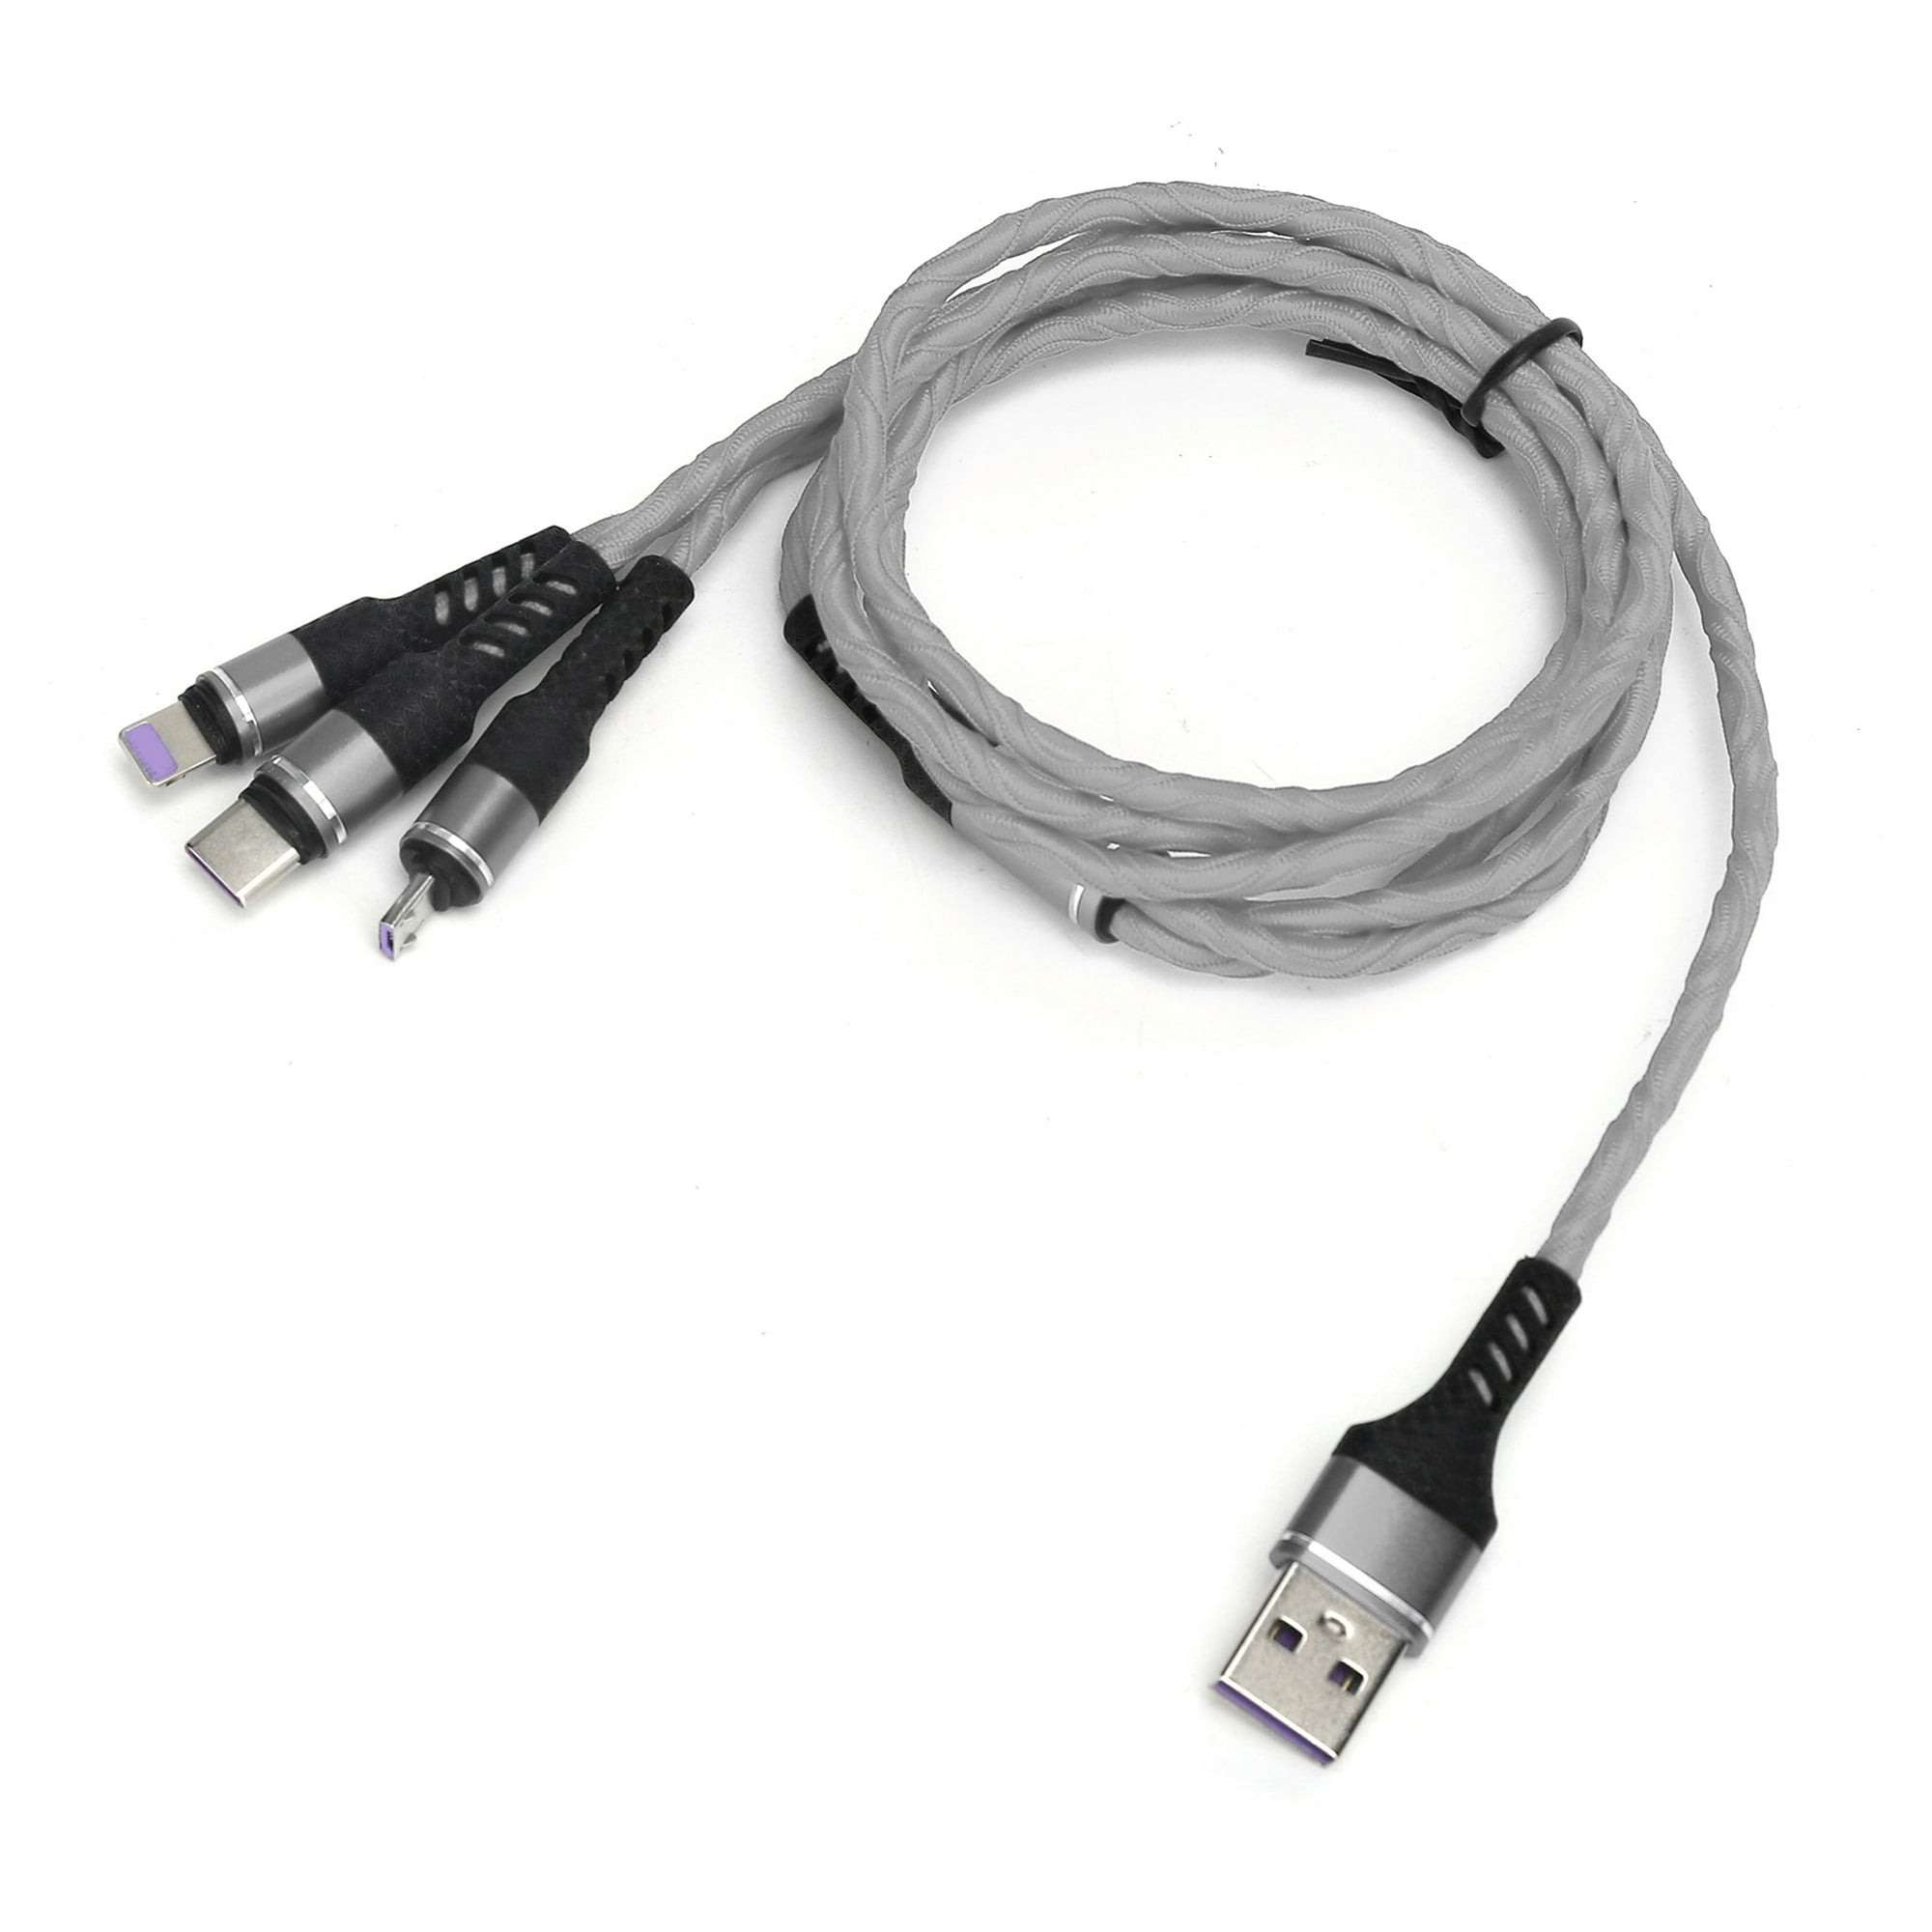 Cable USB 3 en 1, cable portátil rápido de cargador múltiple cable